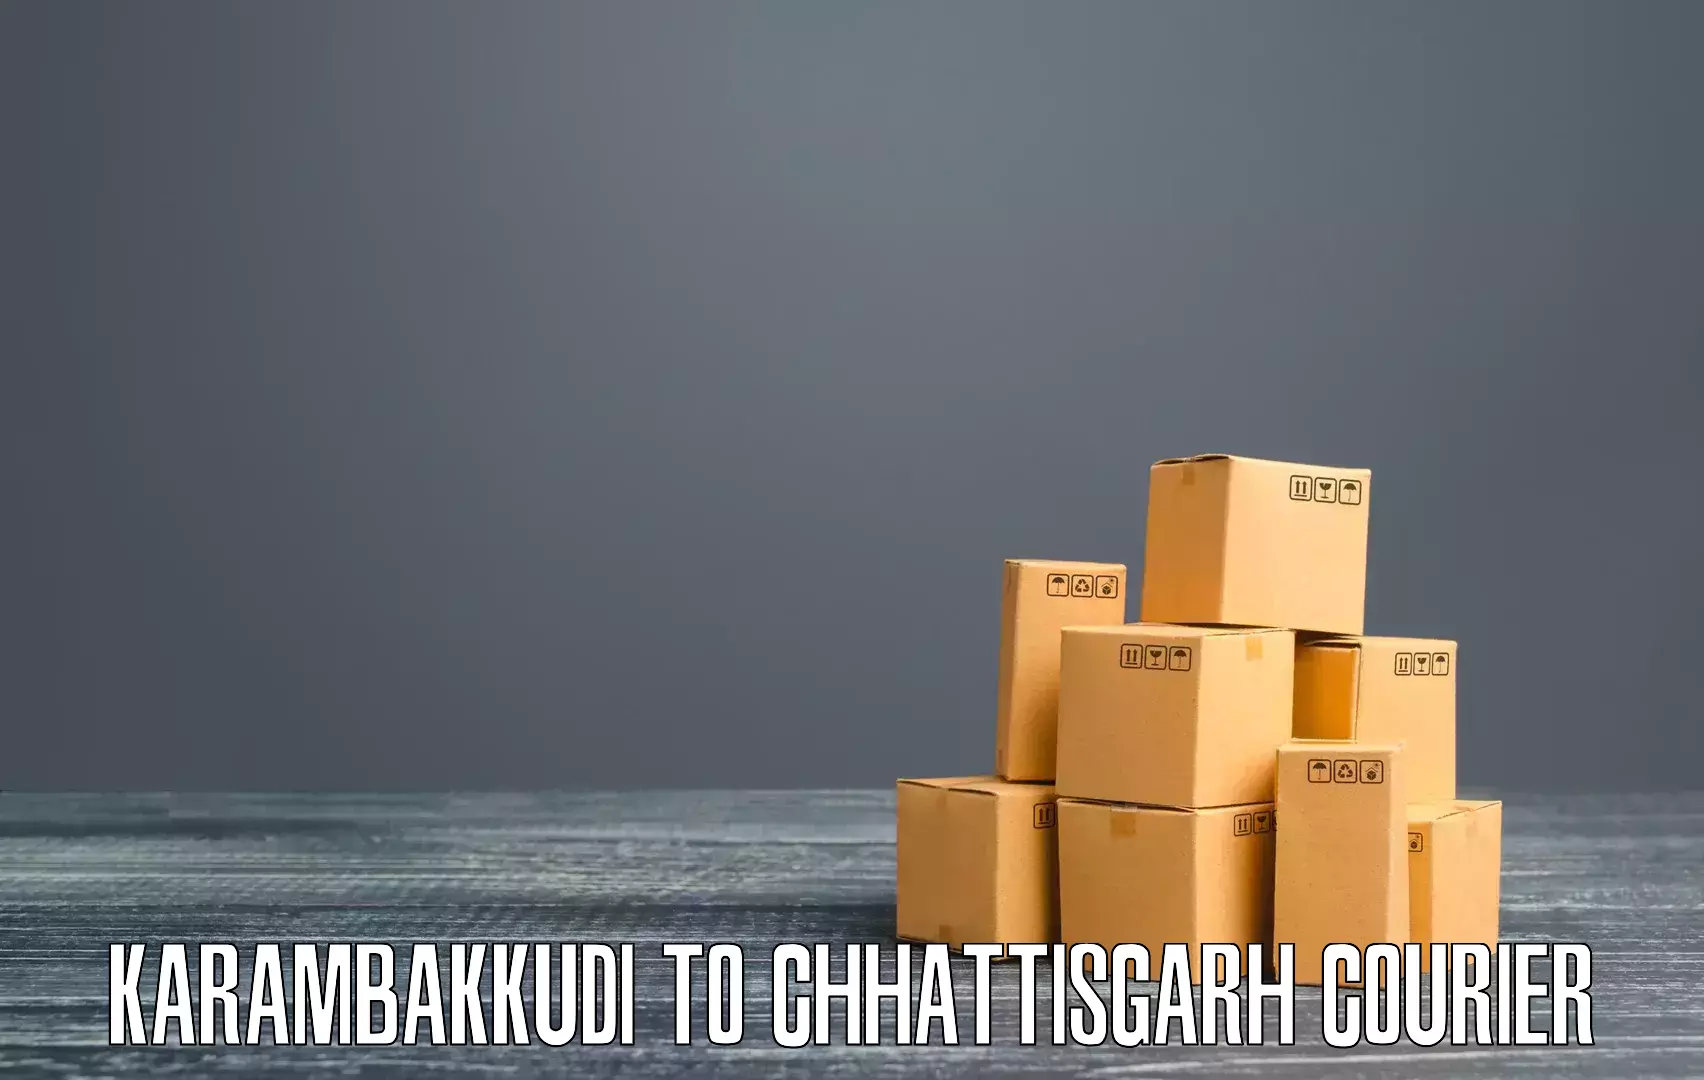 Fast delivery service Karambakkudi to Kanker